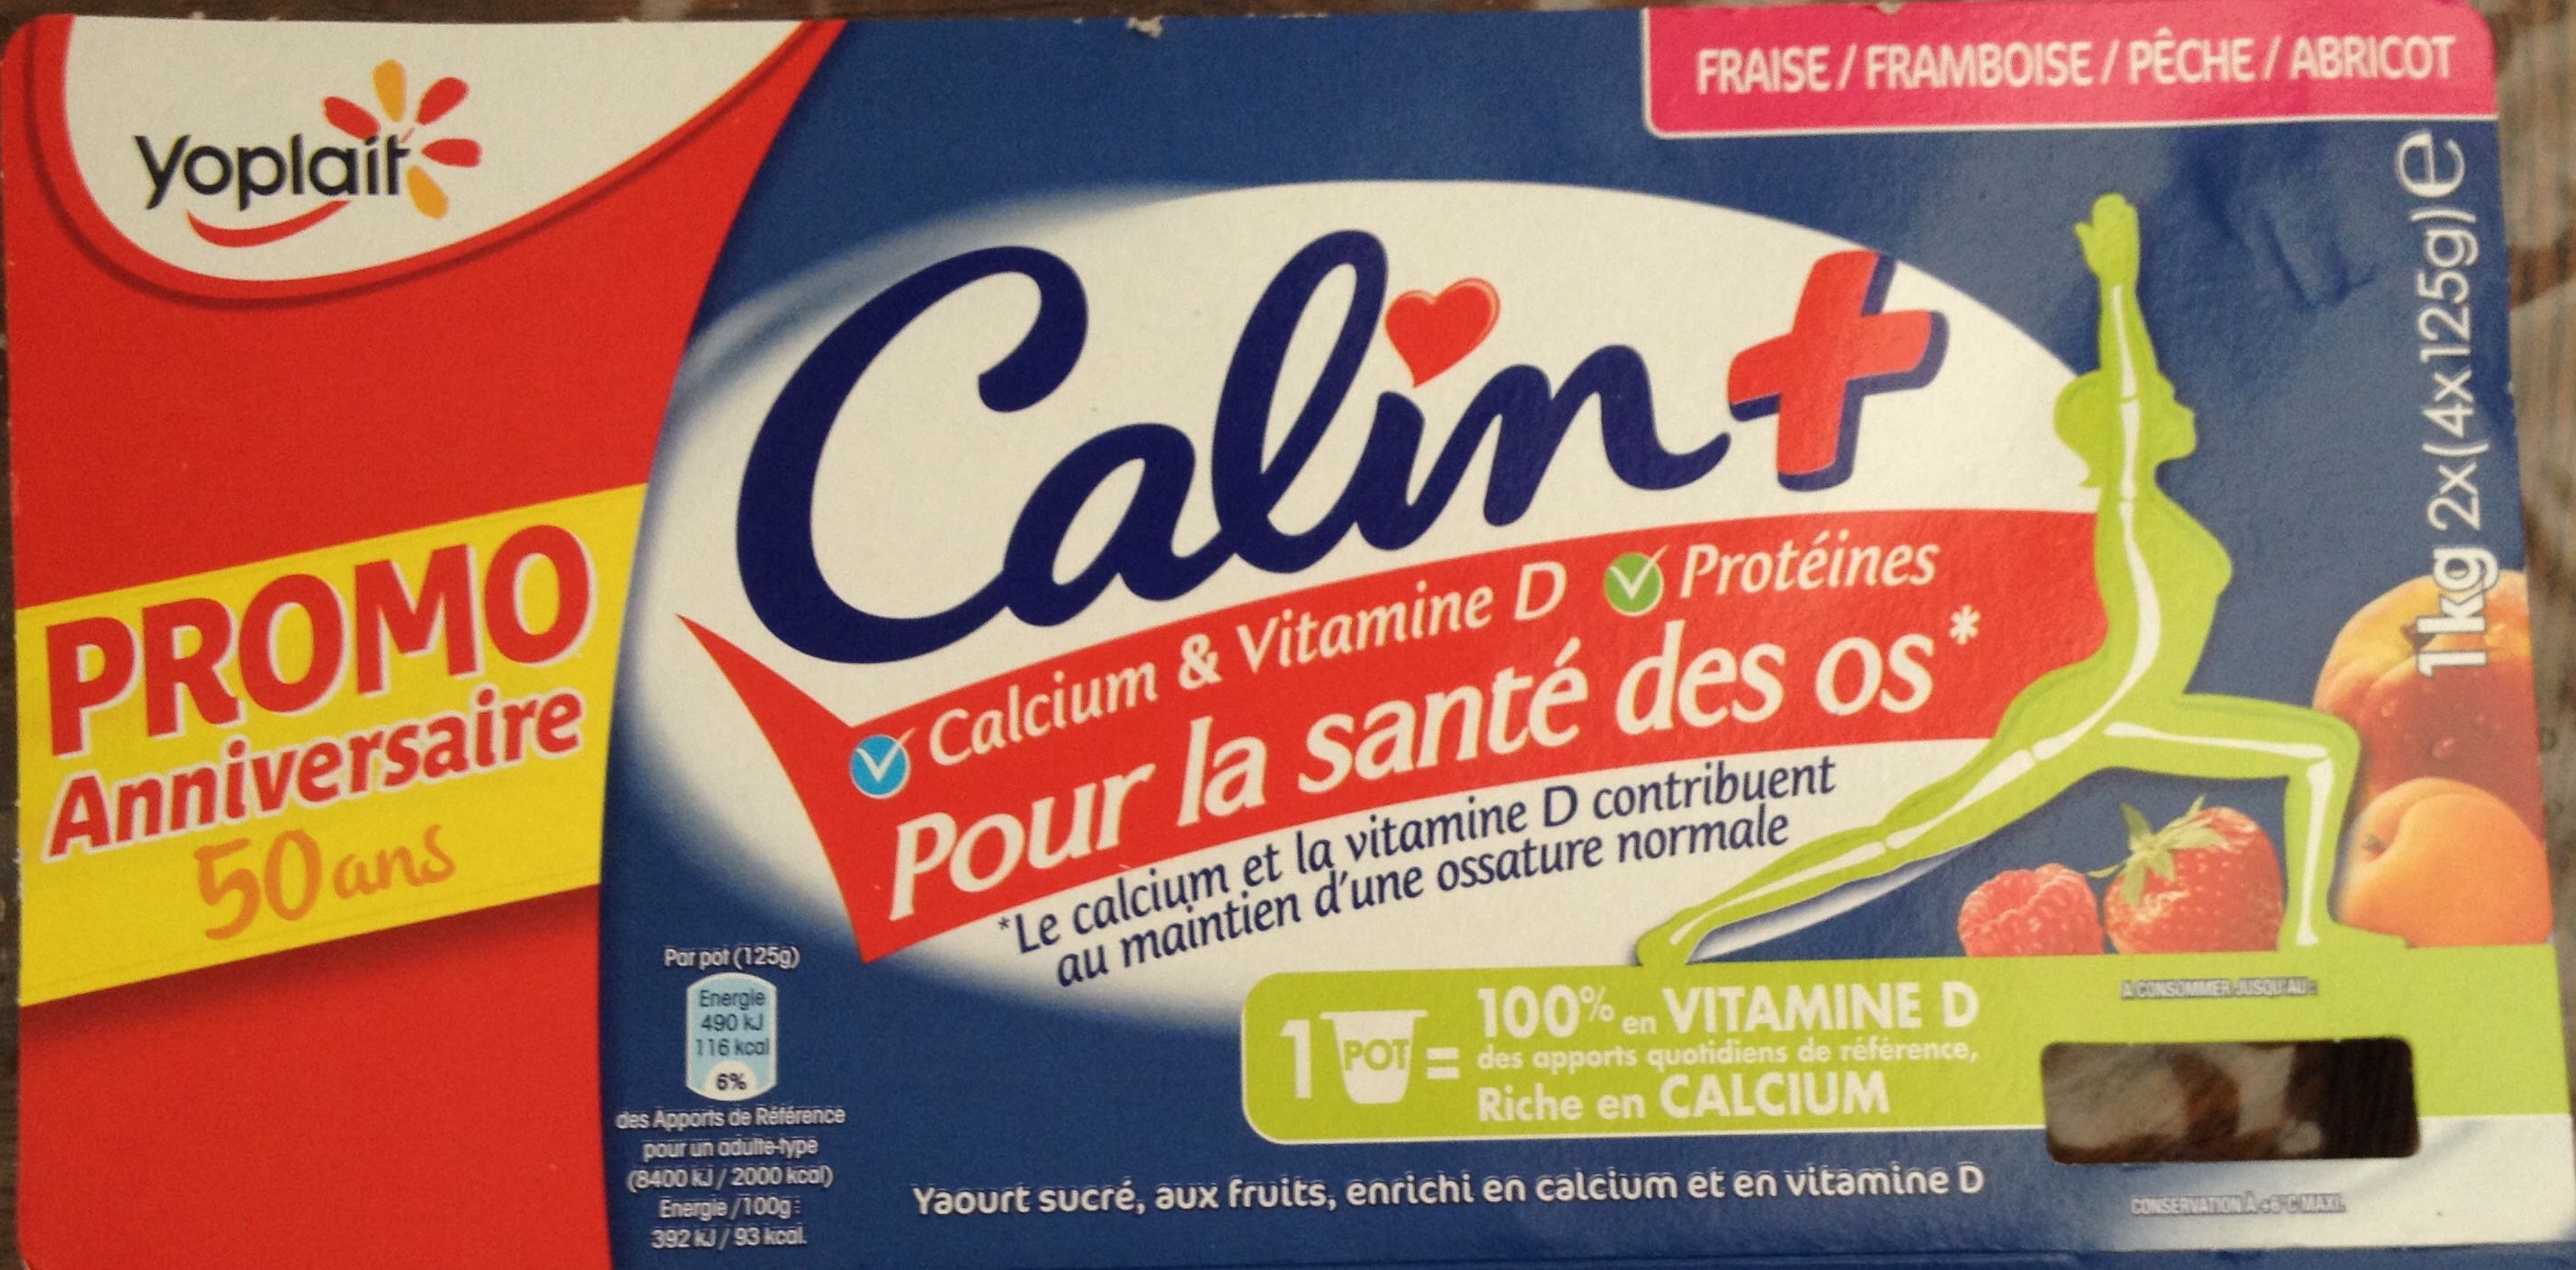 Calin + (Fraise, Framboise, Pêche, Abricot) - Produit